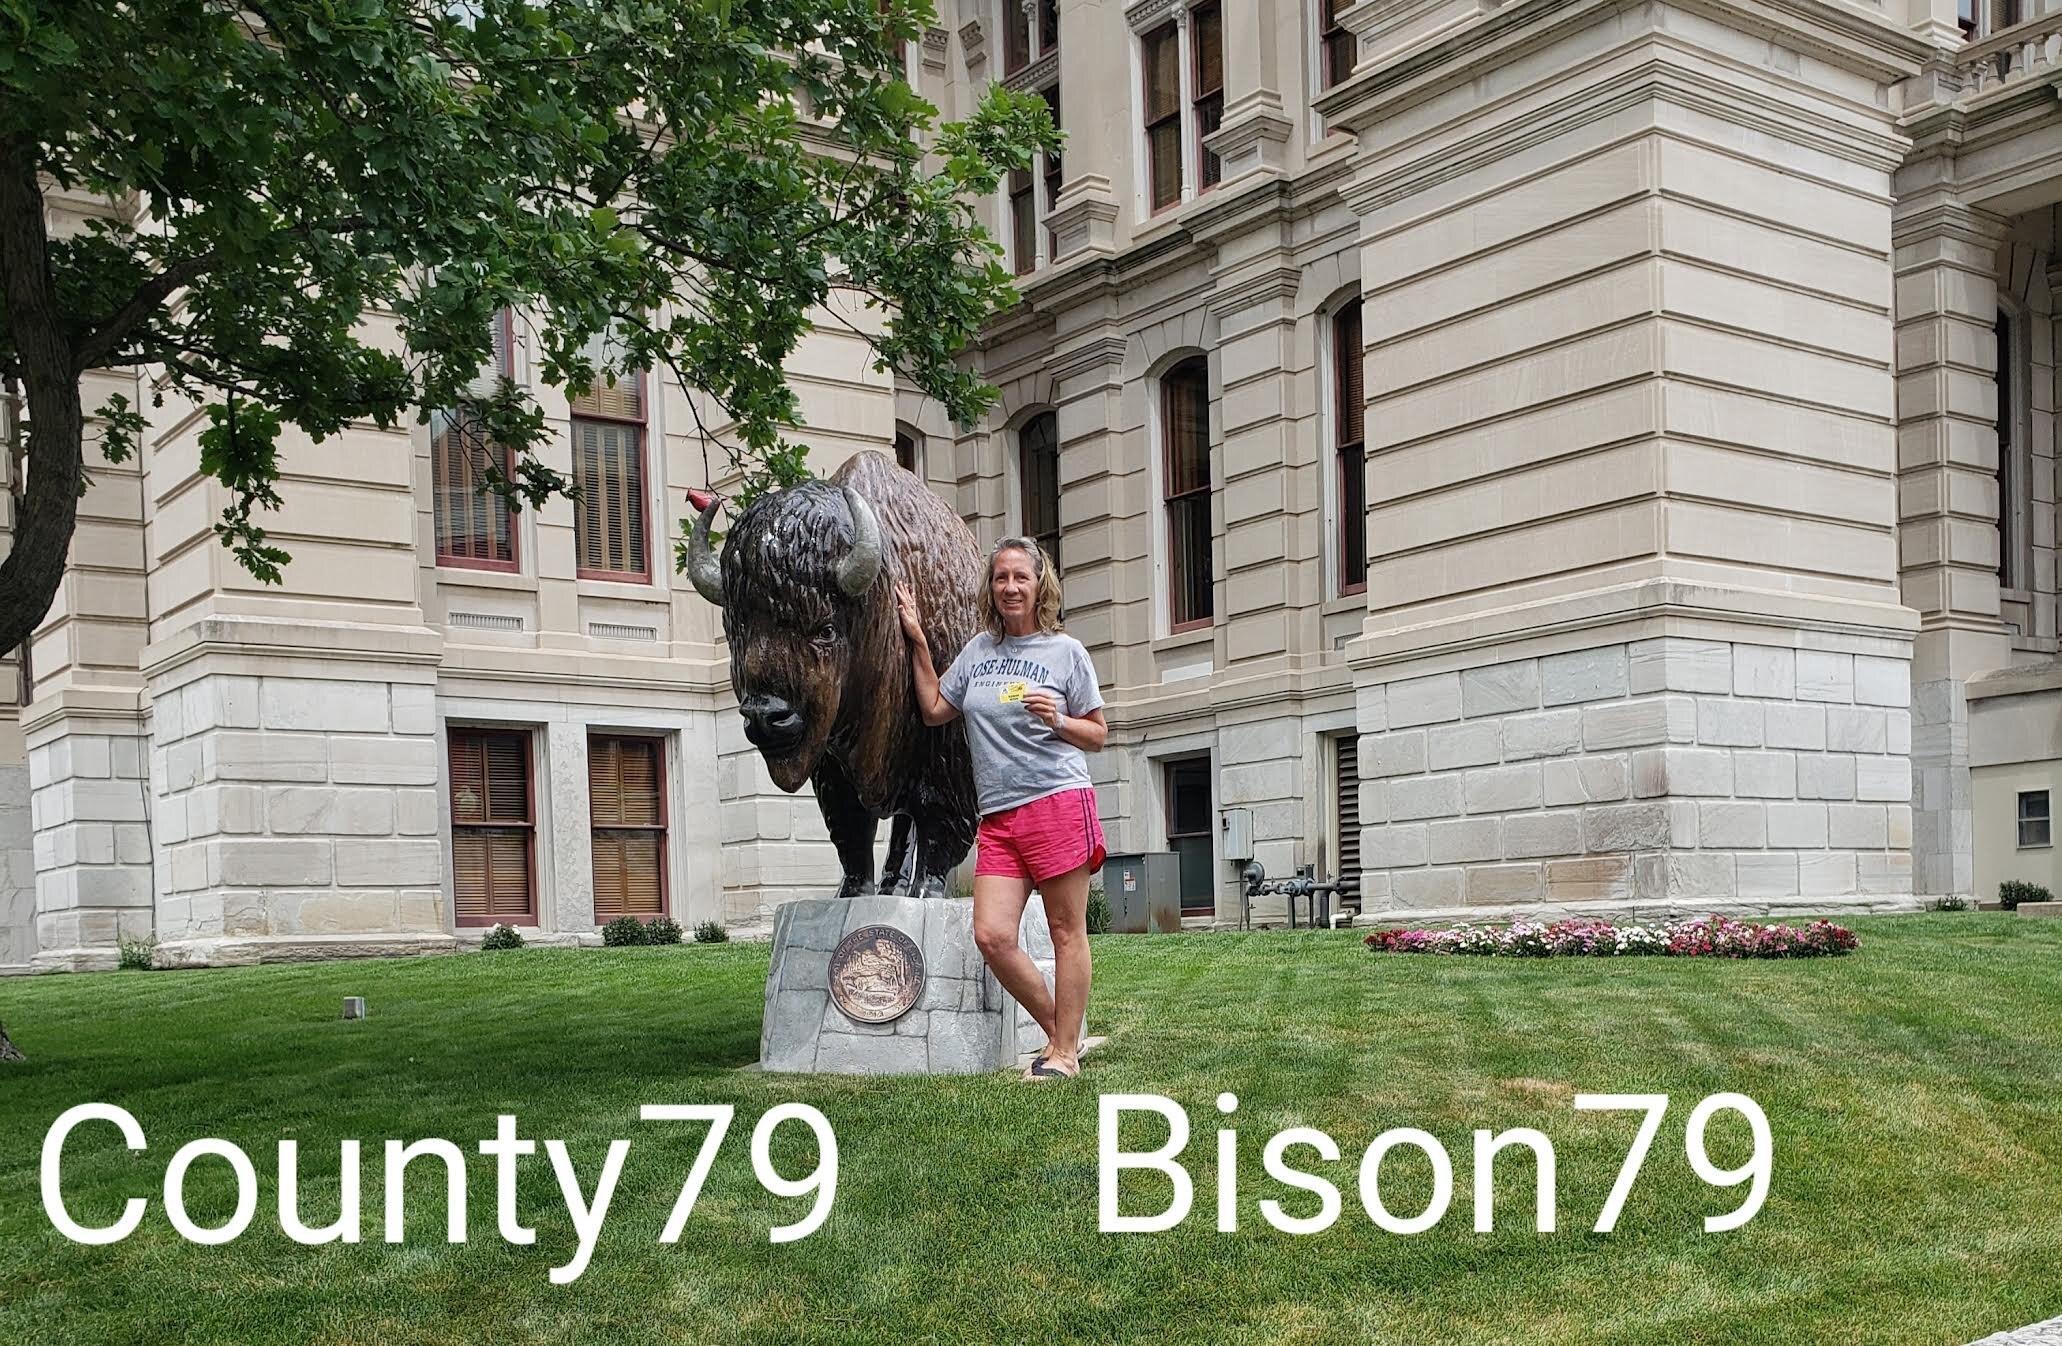 bison79-county79.jpg